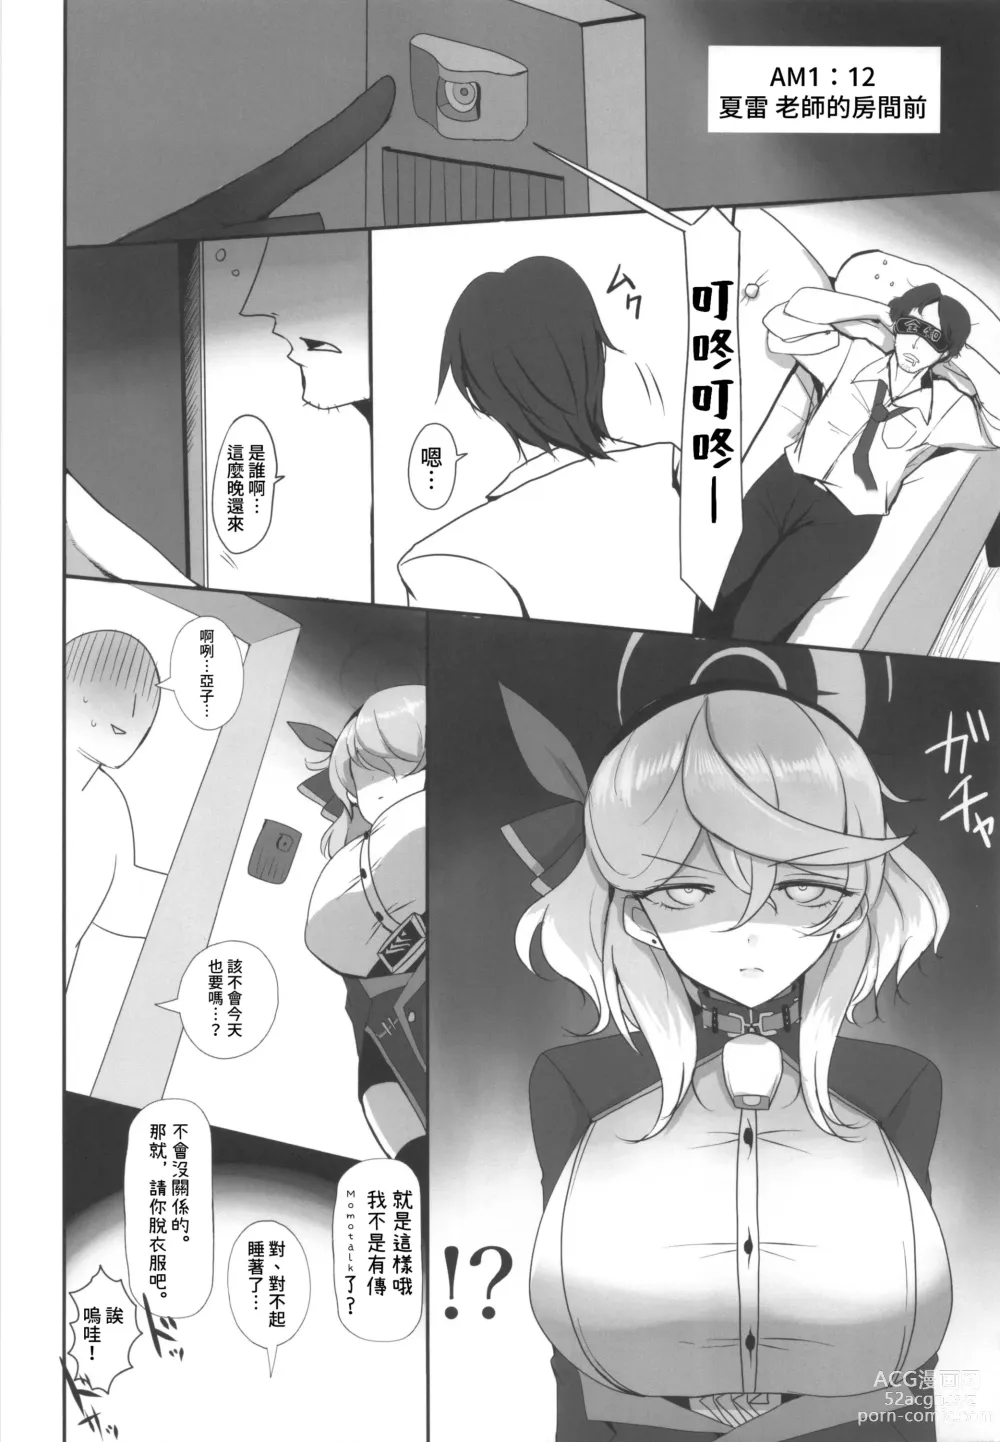 Page 4 of doujinshi 關於格黑娜行政官的性處理事情